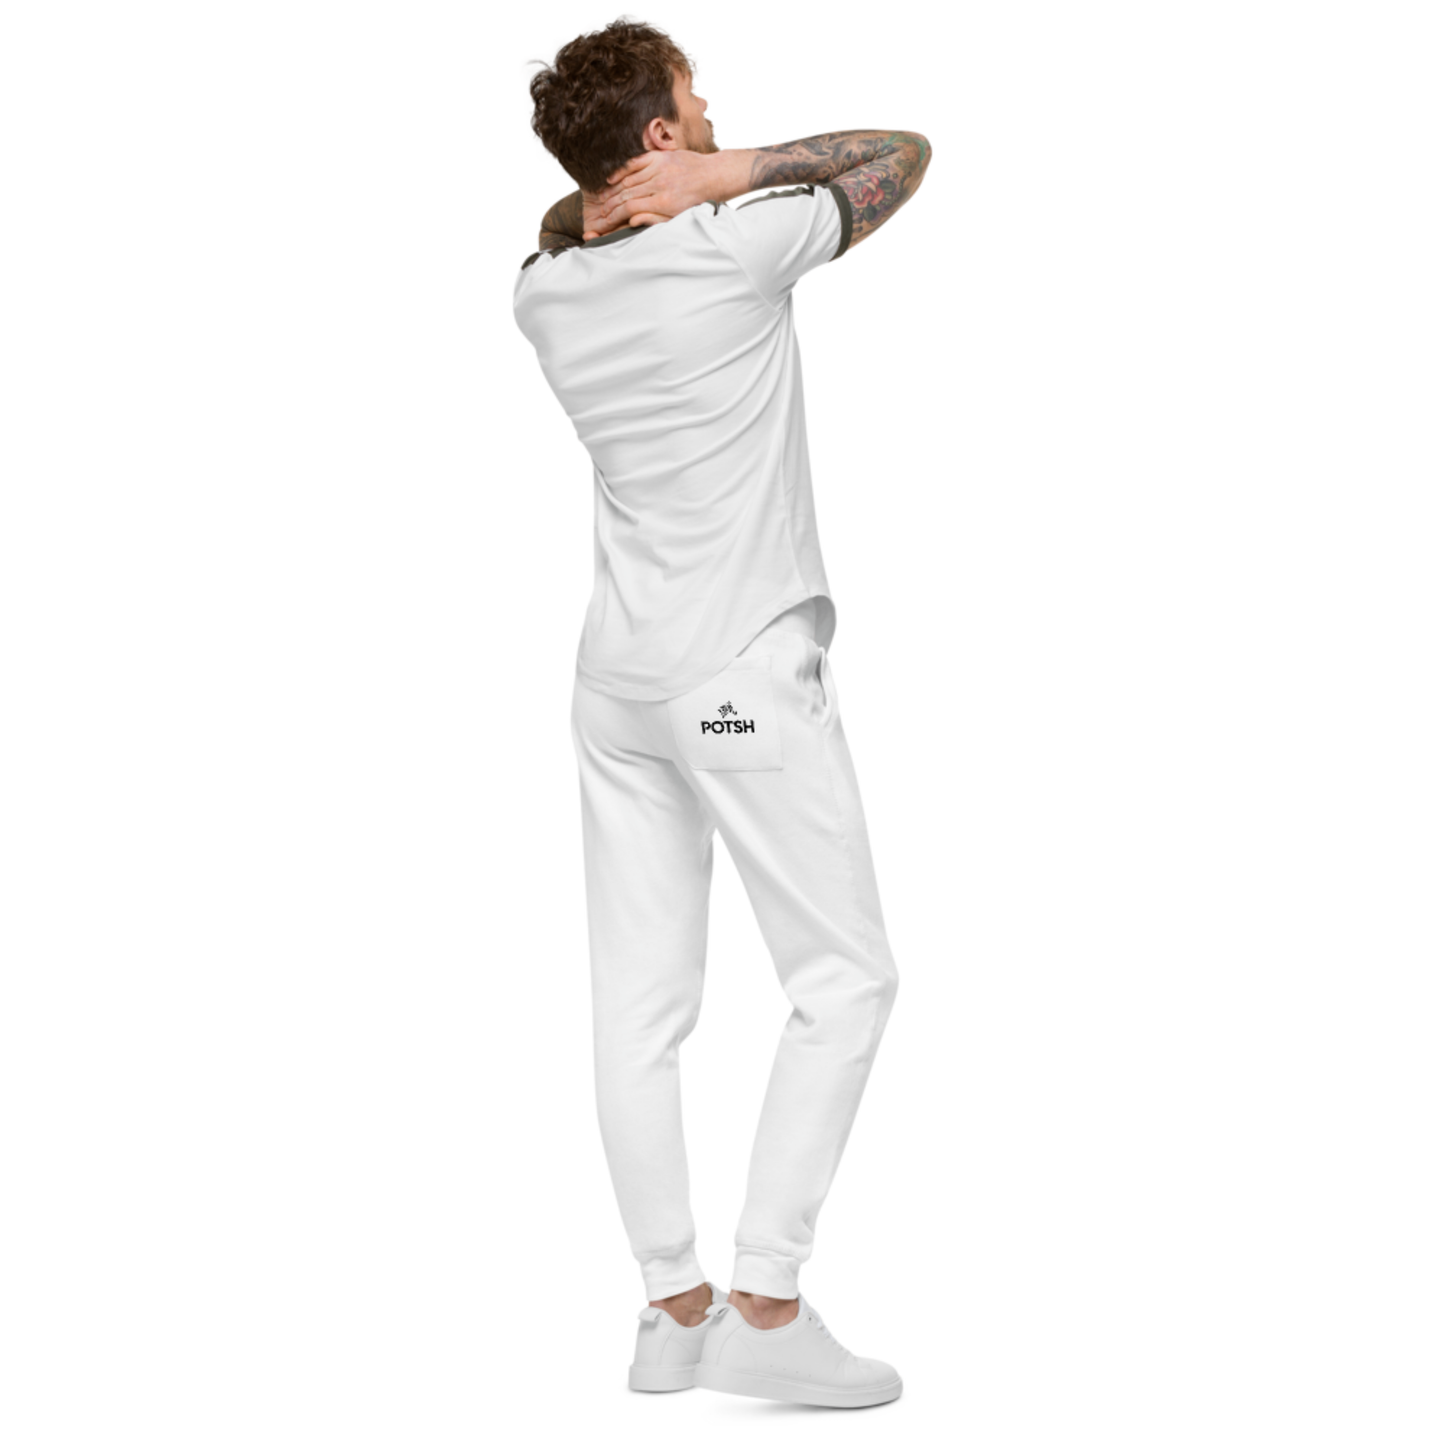 Men's Fleece Sweatpants with POTSH Back Pocket - White